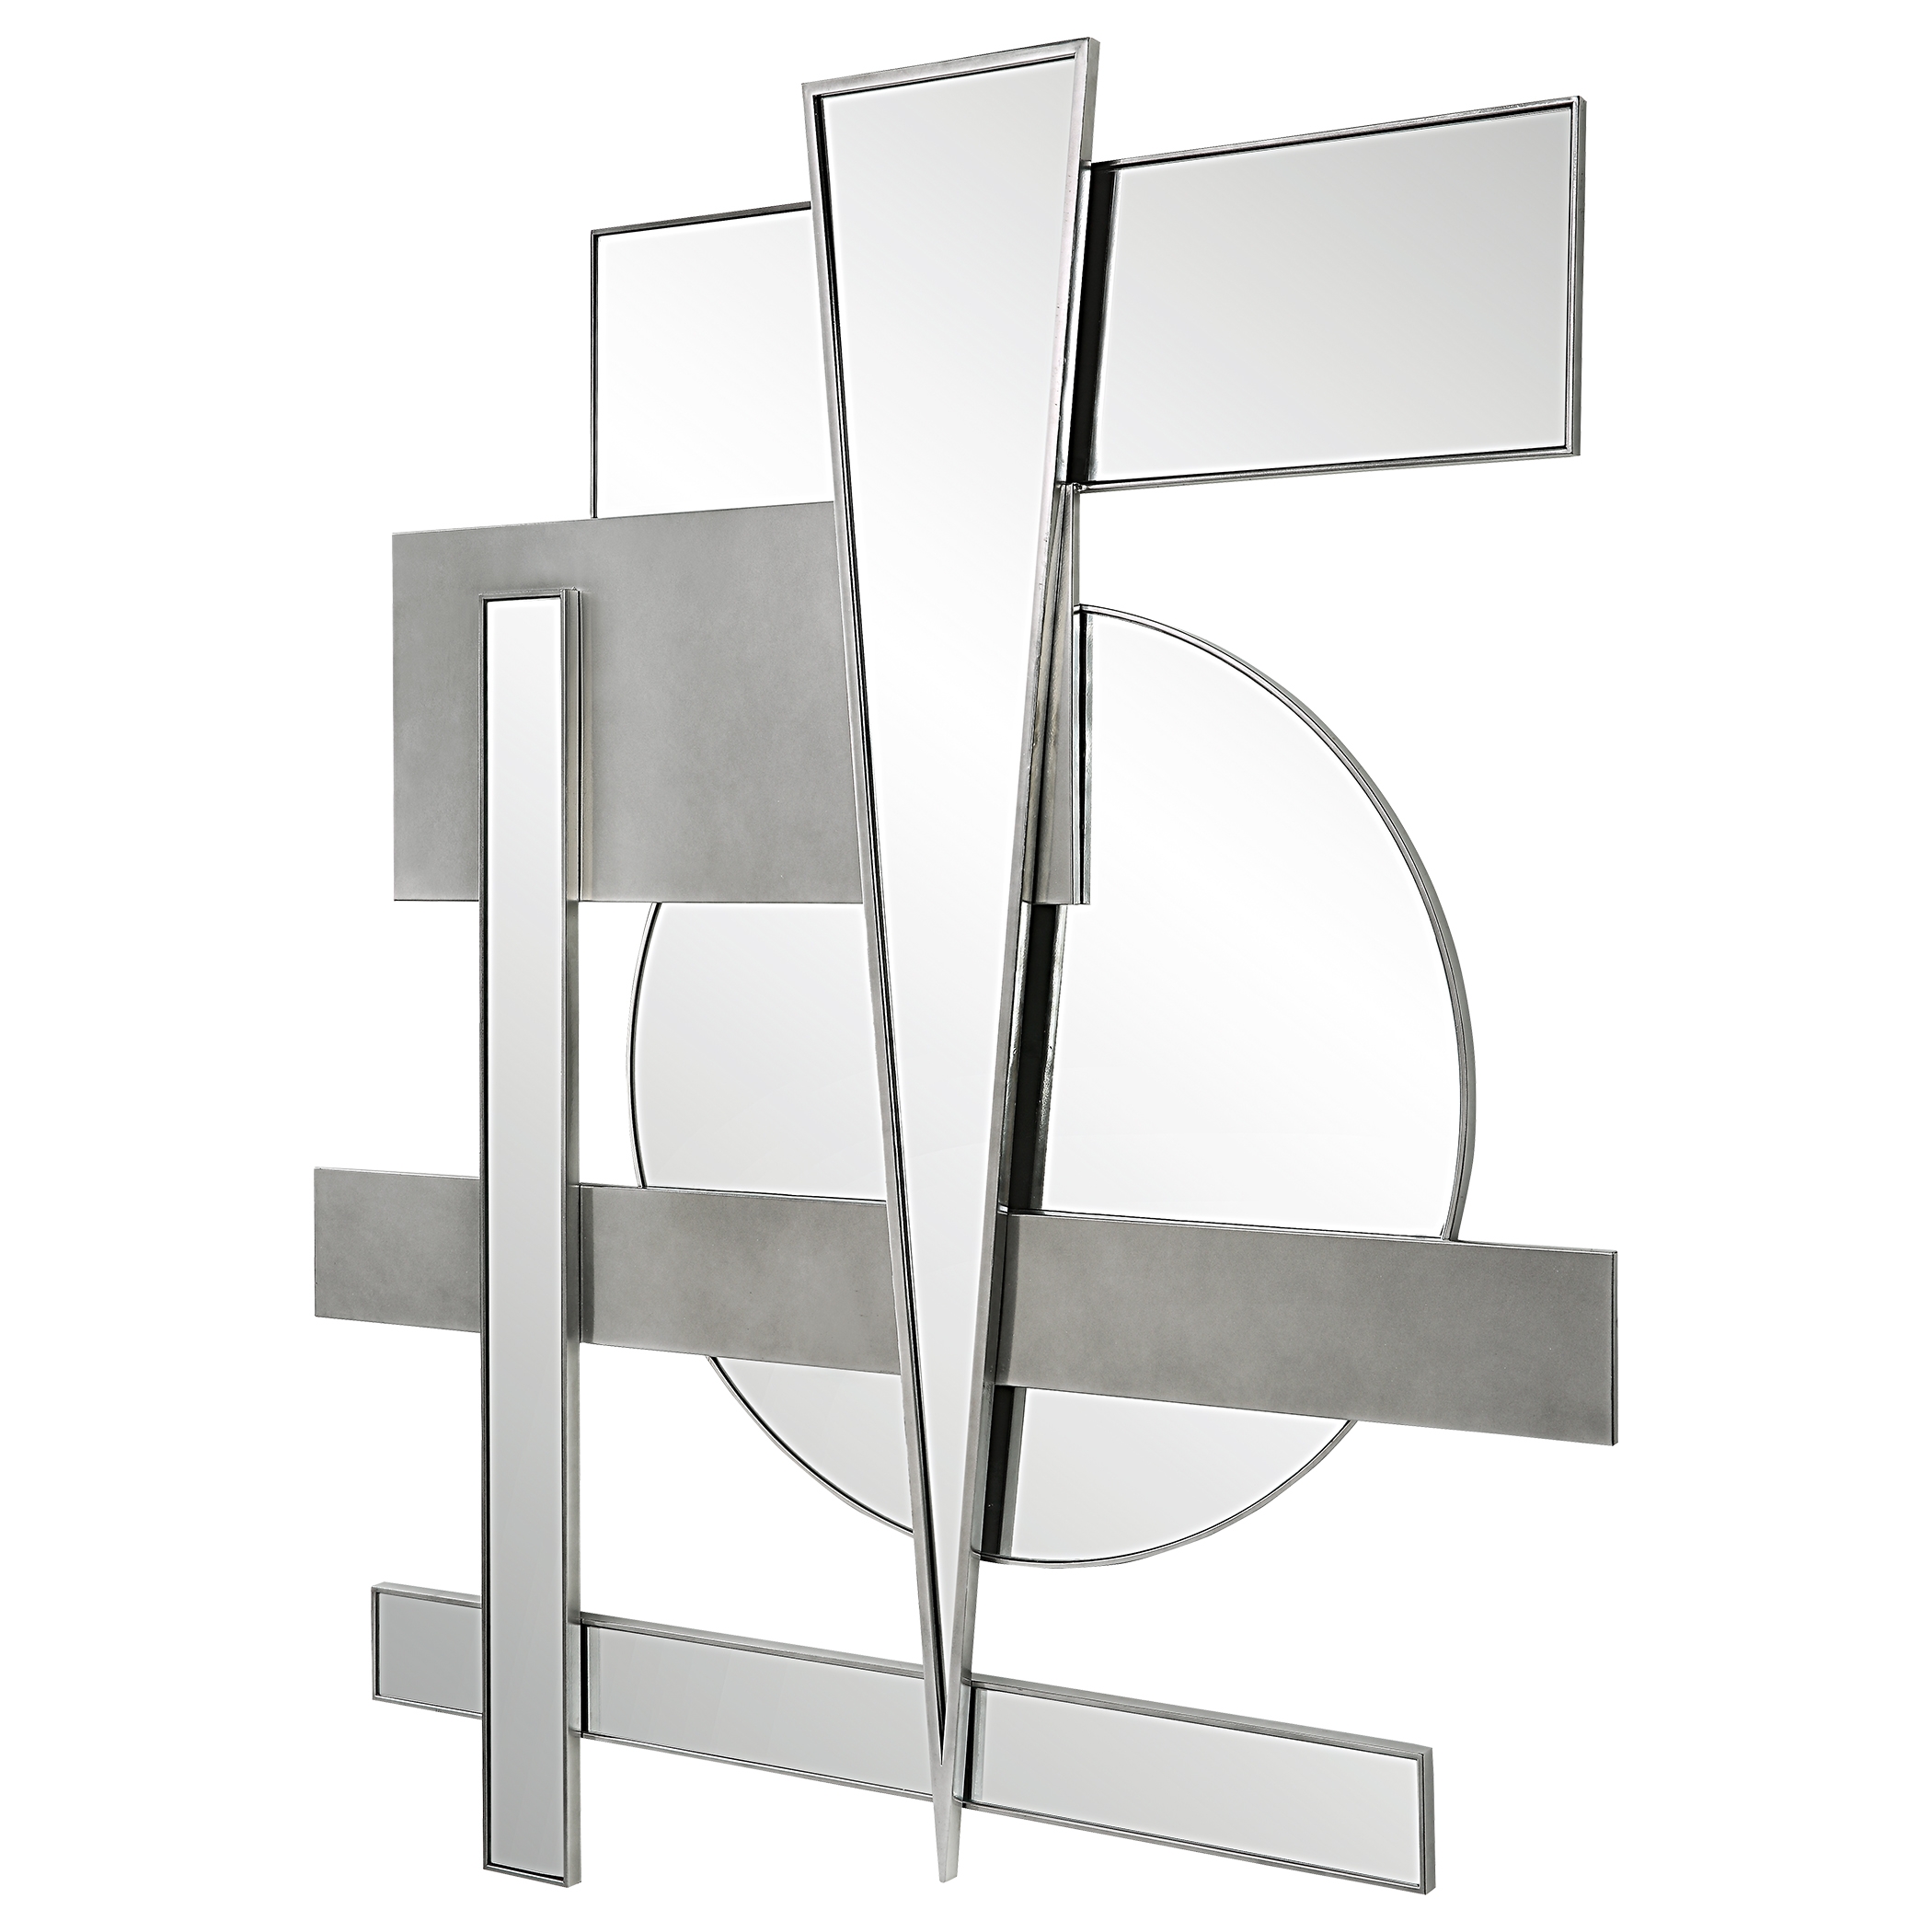 Wedge Mirrored Modern Wall Decor - Image 2